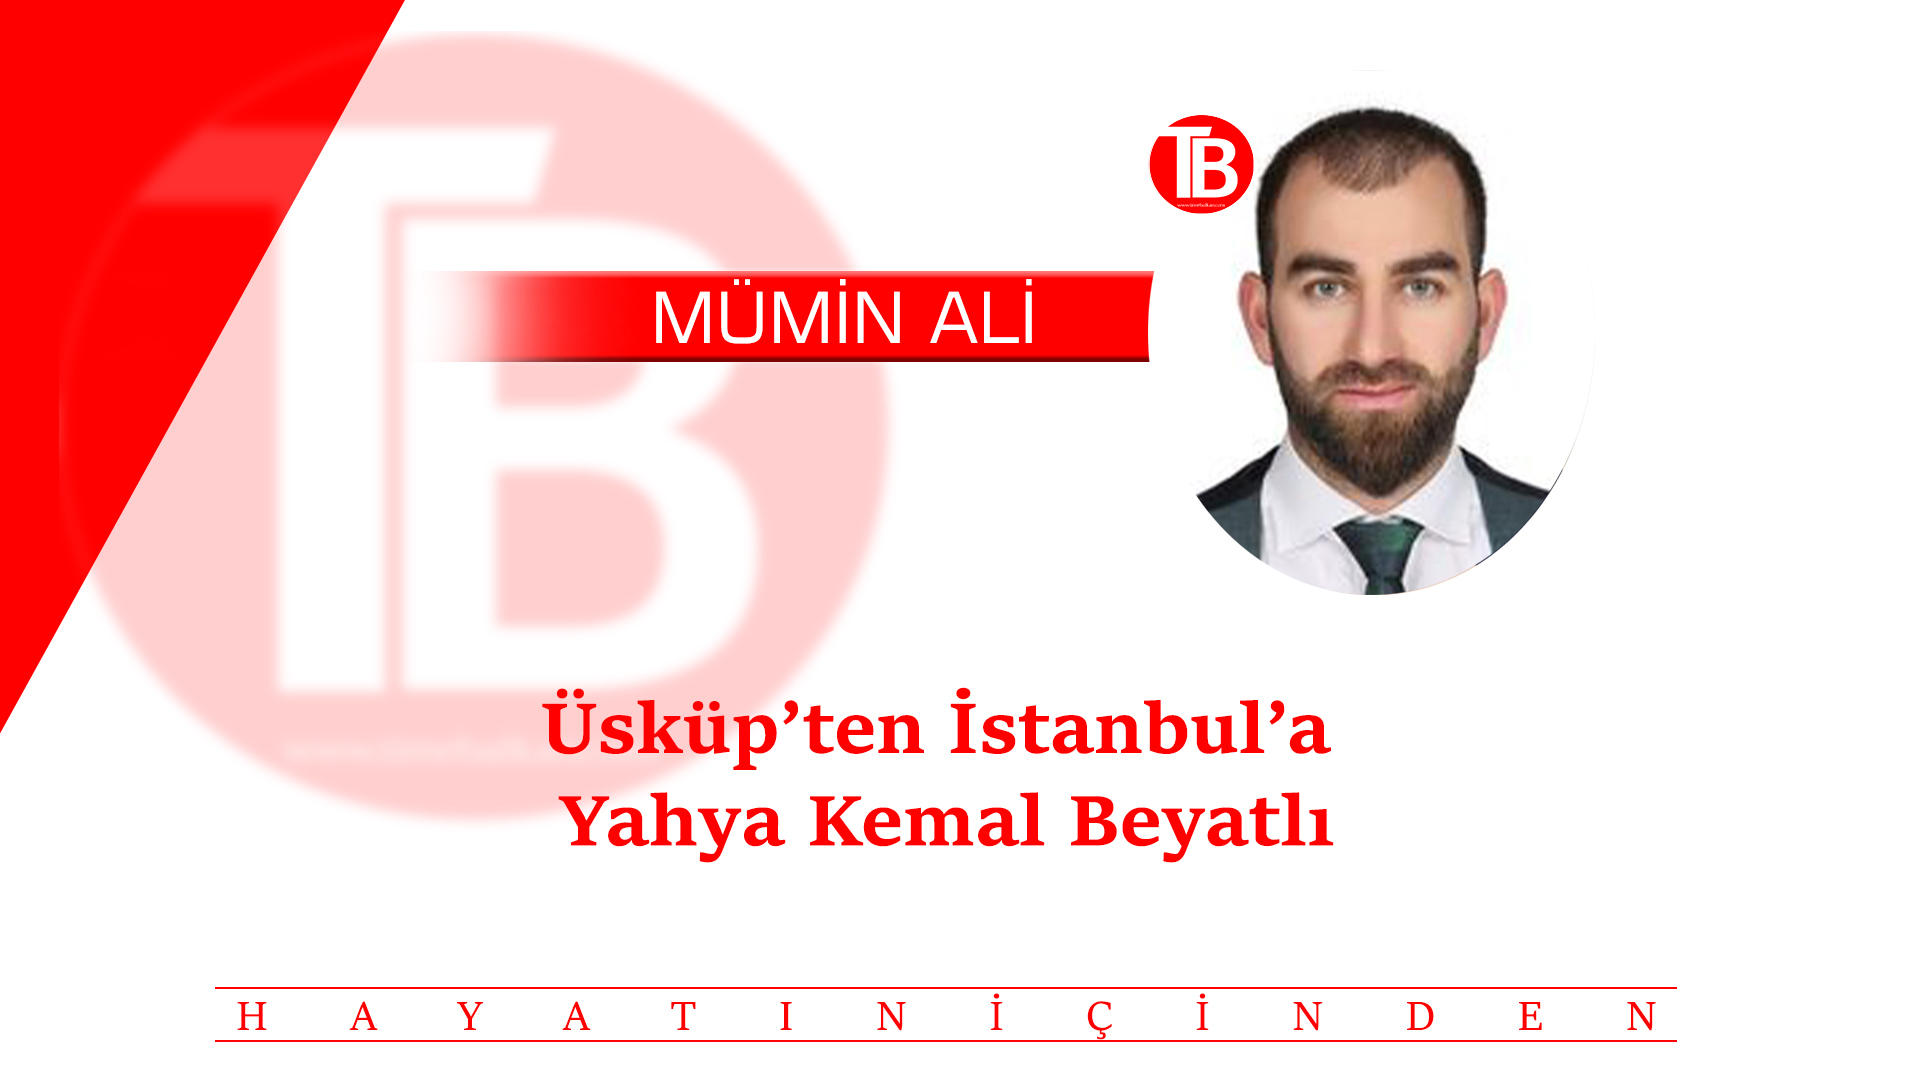 Üsküp’ten İstanbul’a Yahya Kemal Beyatlı